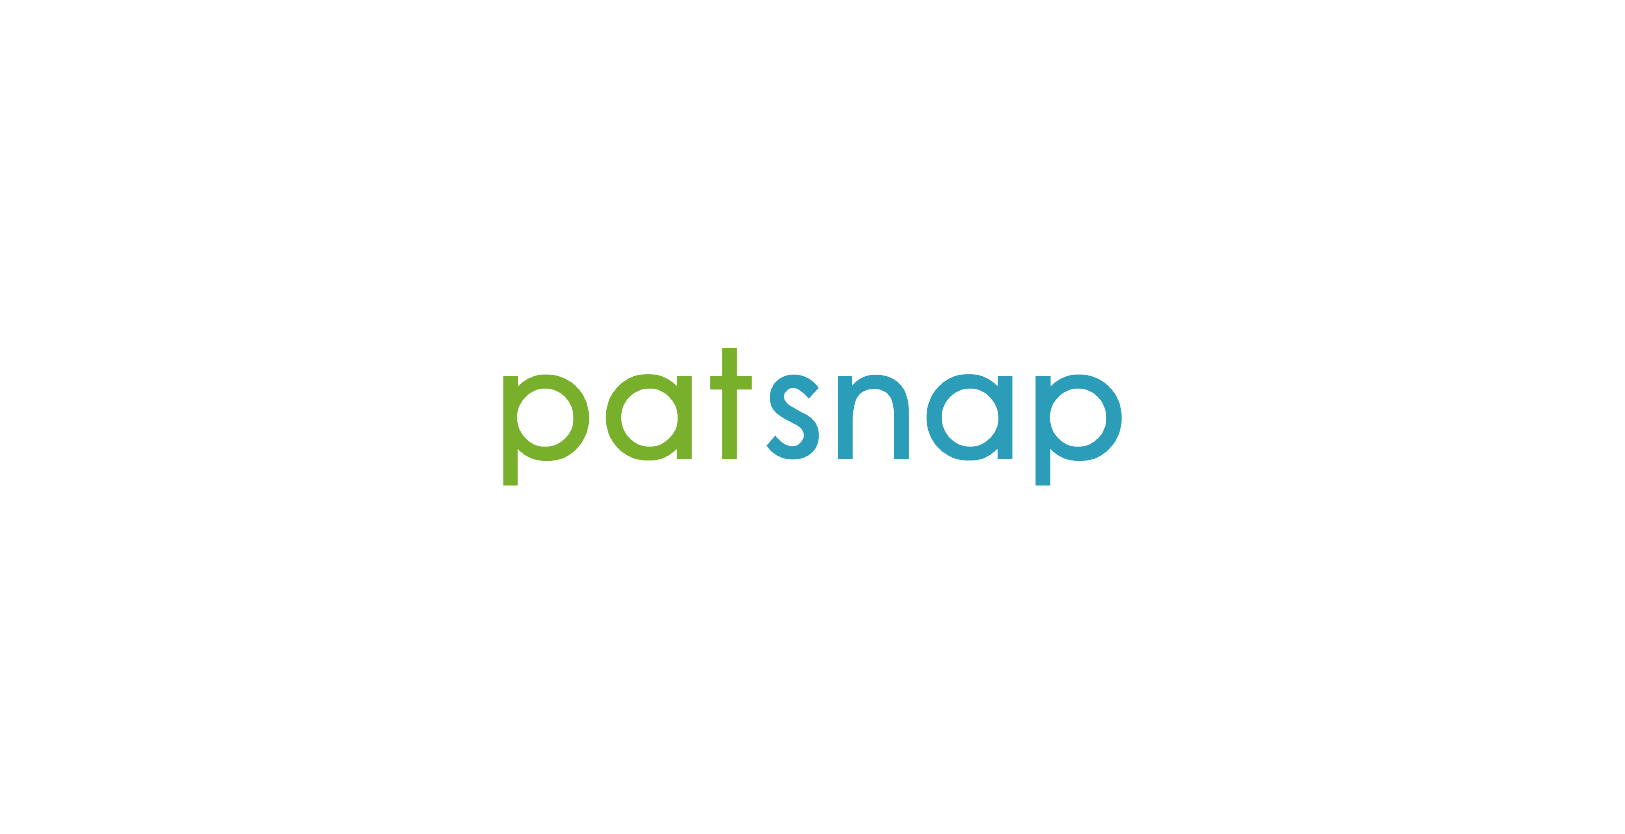 Vision Fund investment portfolio company PatSnap's logo